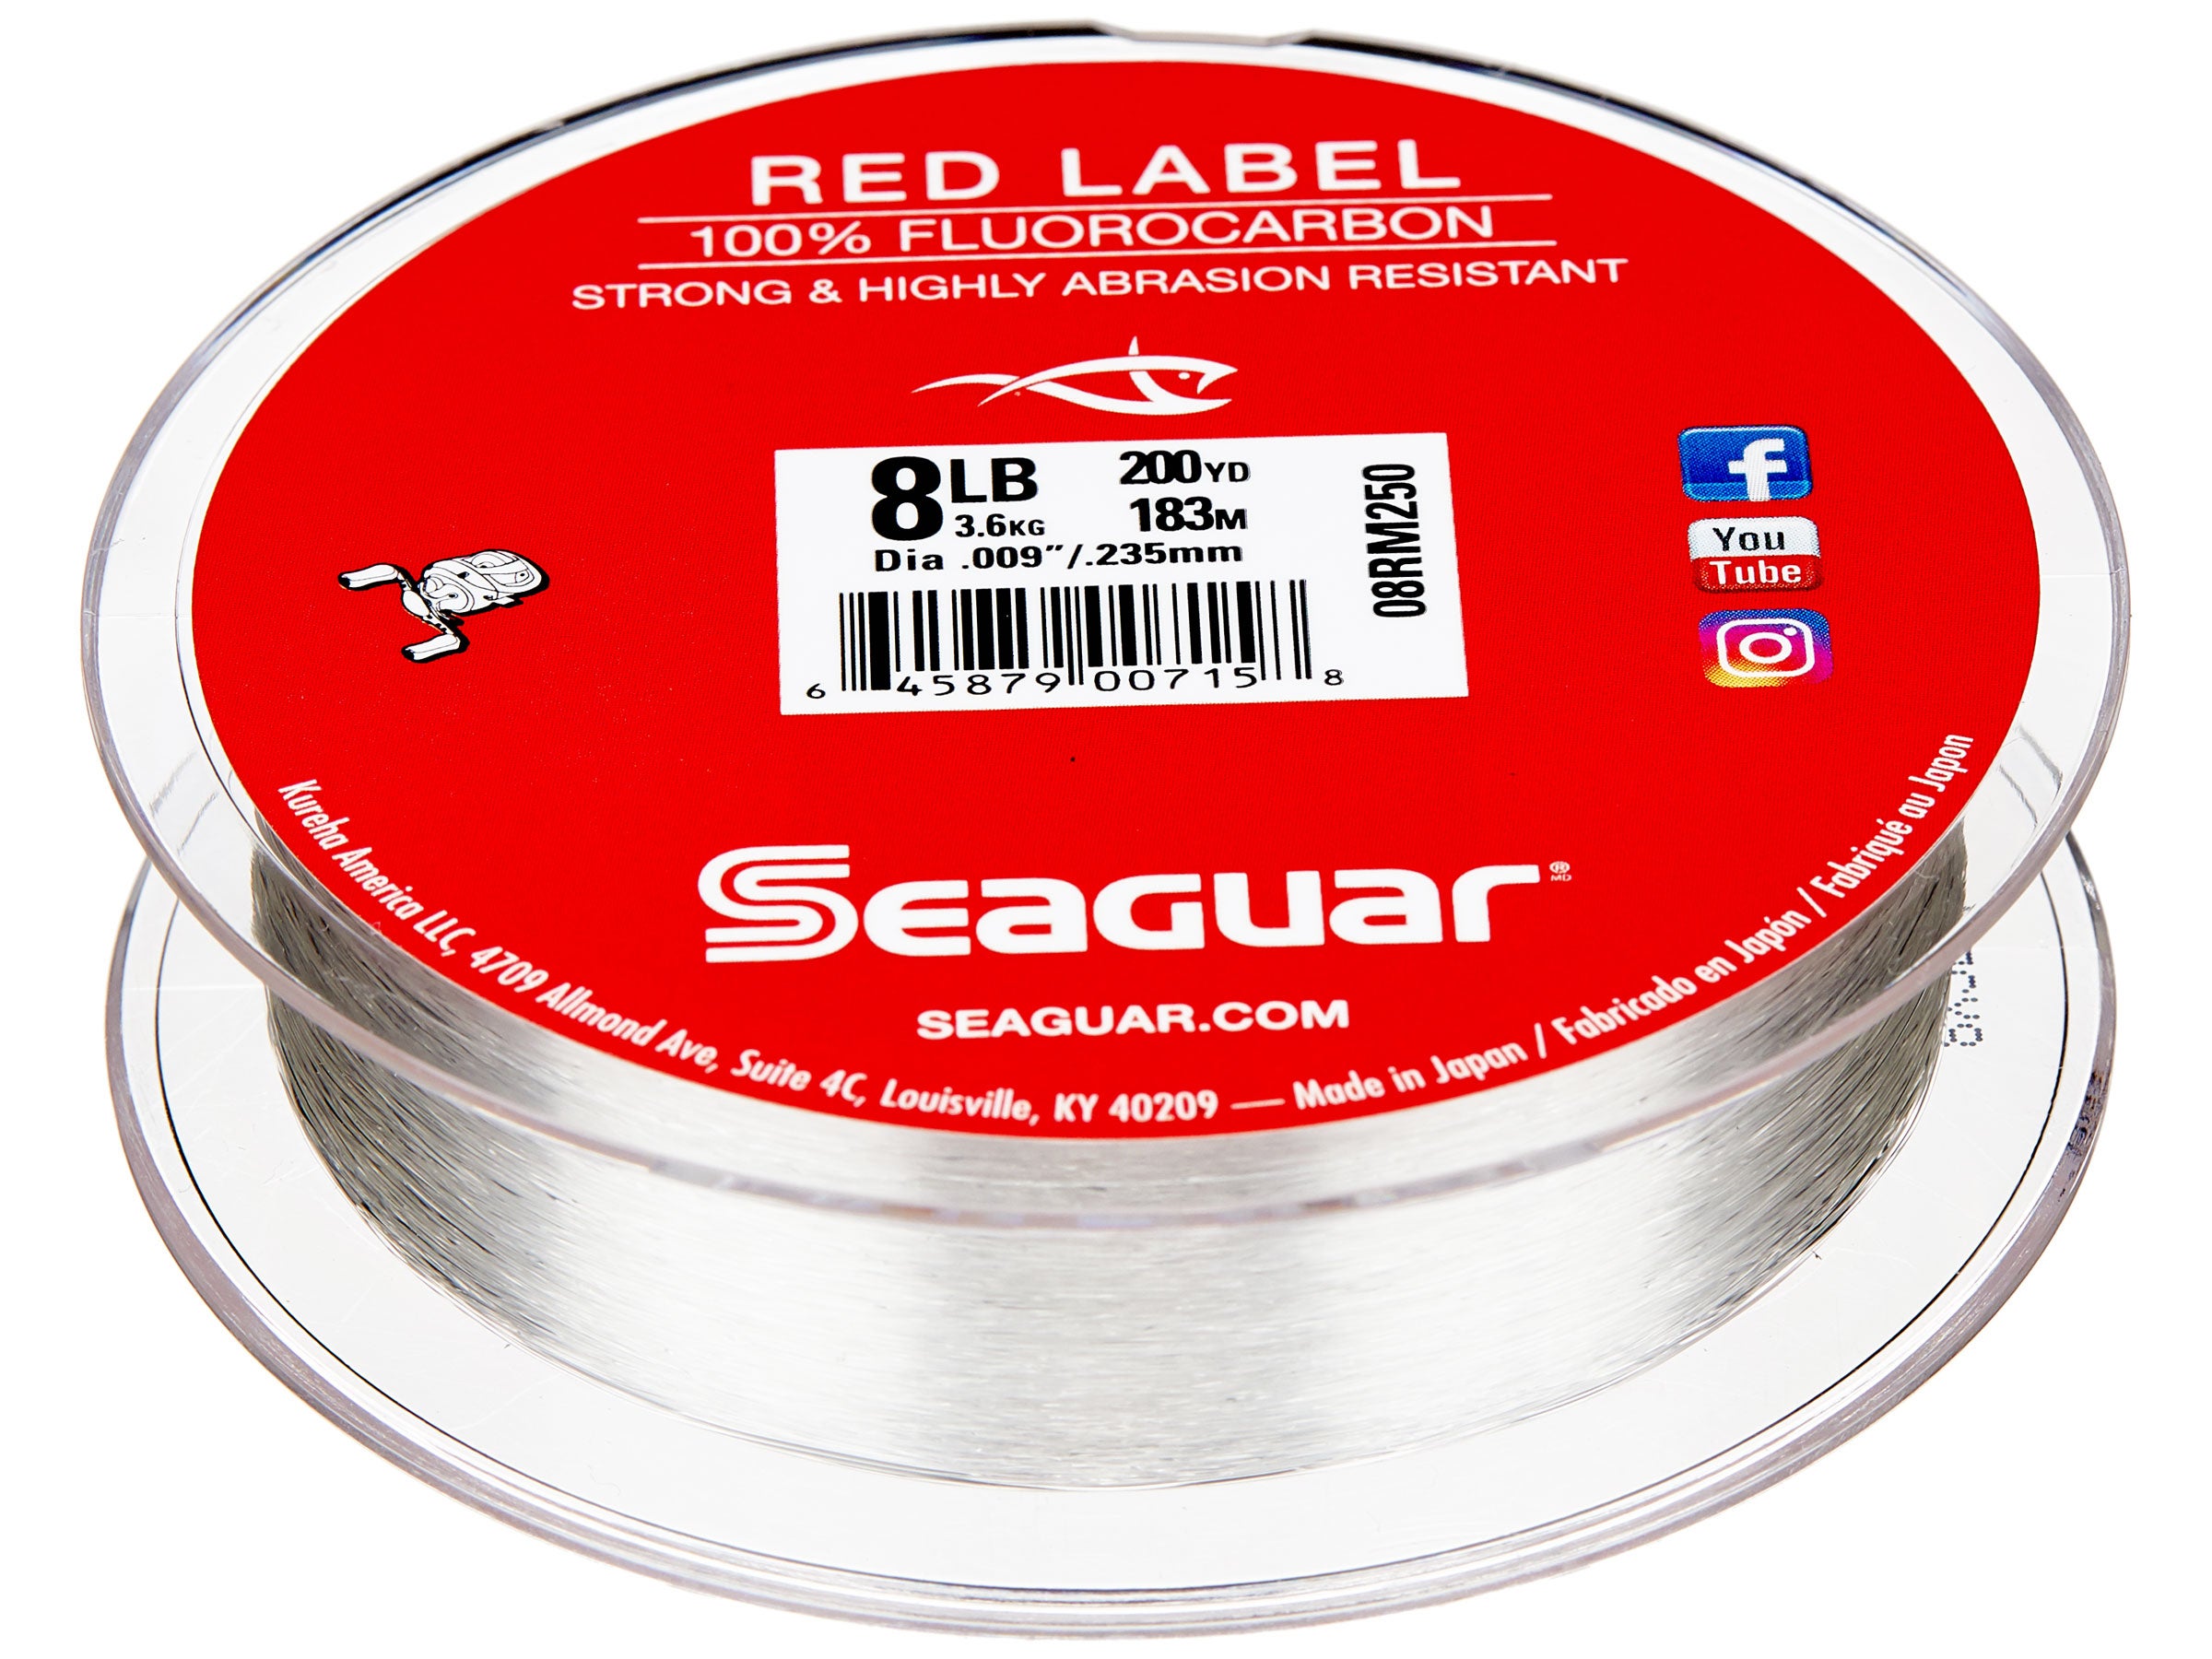 Seaguar 80RL25 Red Label Fluorocarbon Leader Material 80lb 25yd 